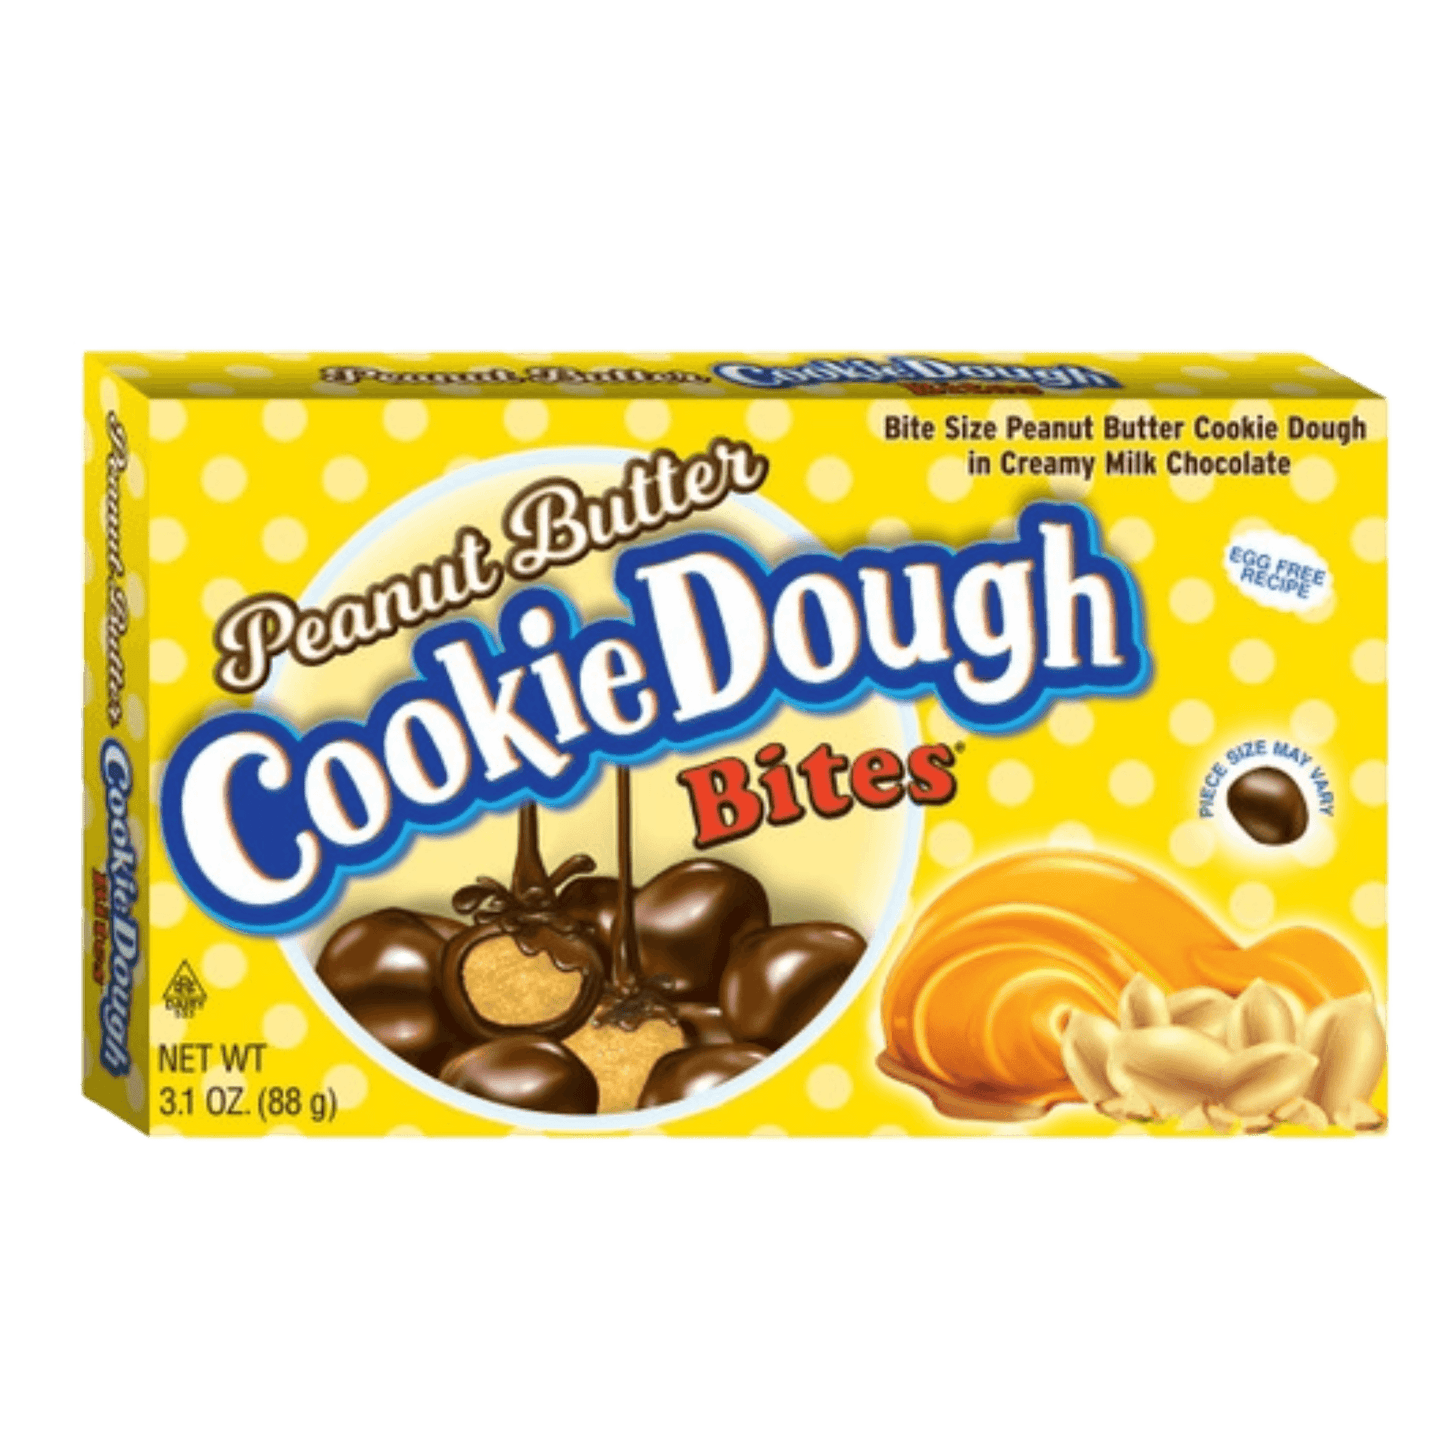 Zero Waste | Cookie Dough Bites Peanut Butter (88g) - Candy & Chocolate - Scran.ie